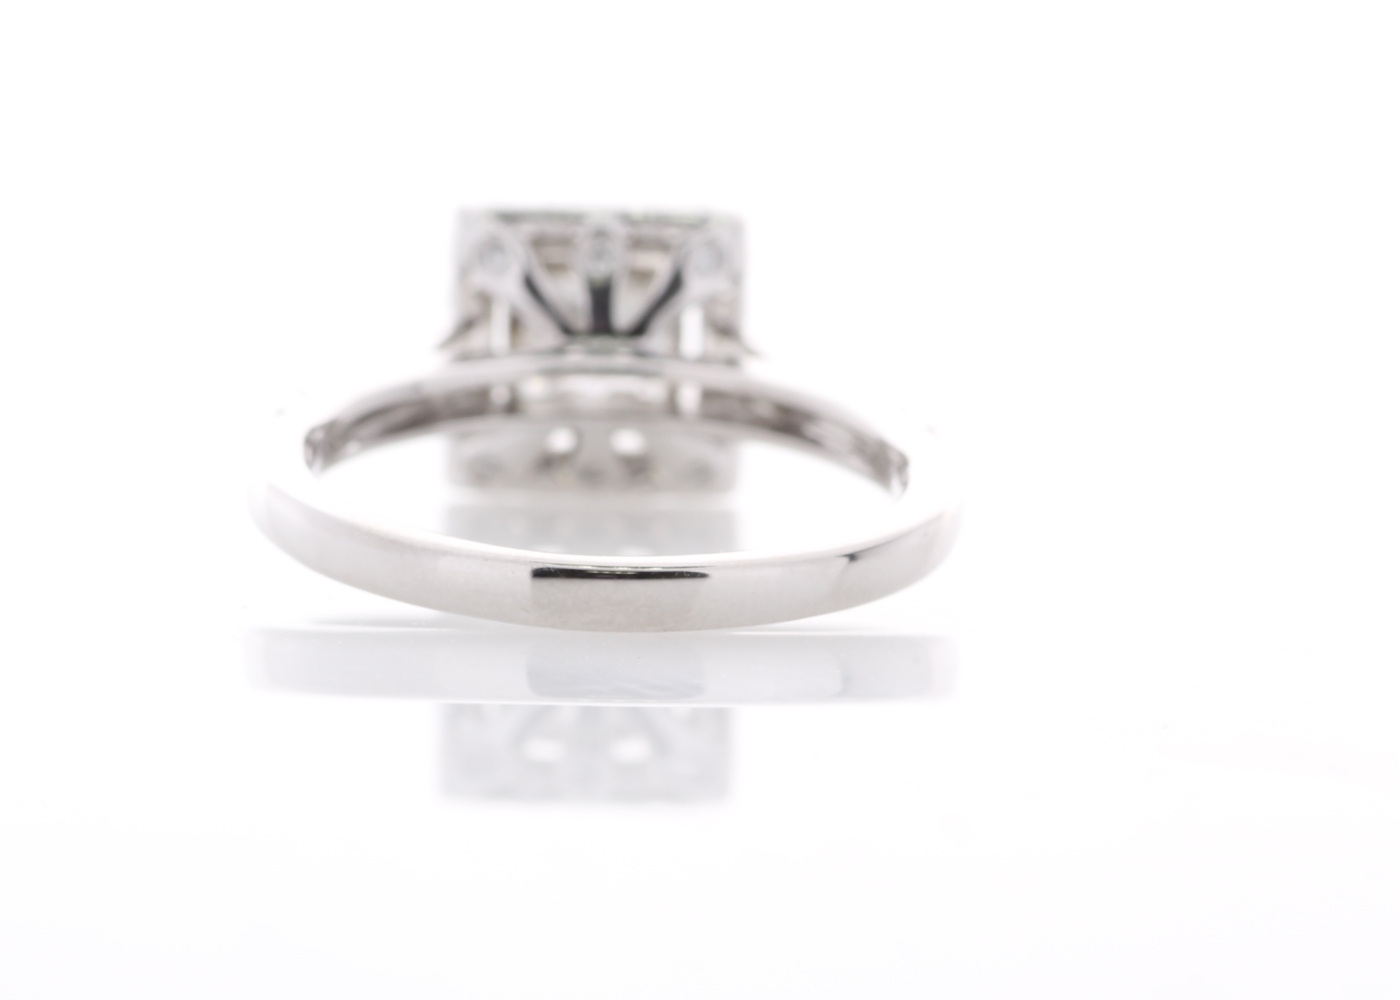 18ct White Gold Single Stone Princess Cut Diamond Ring (1.00) 1.34 Carats - Image 3 of 5